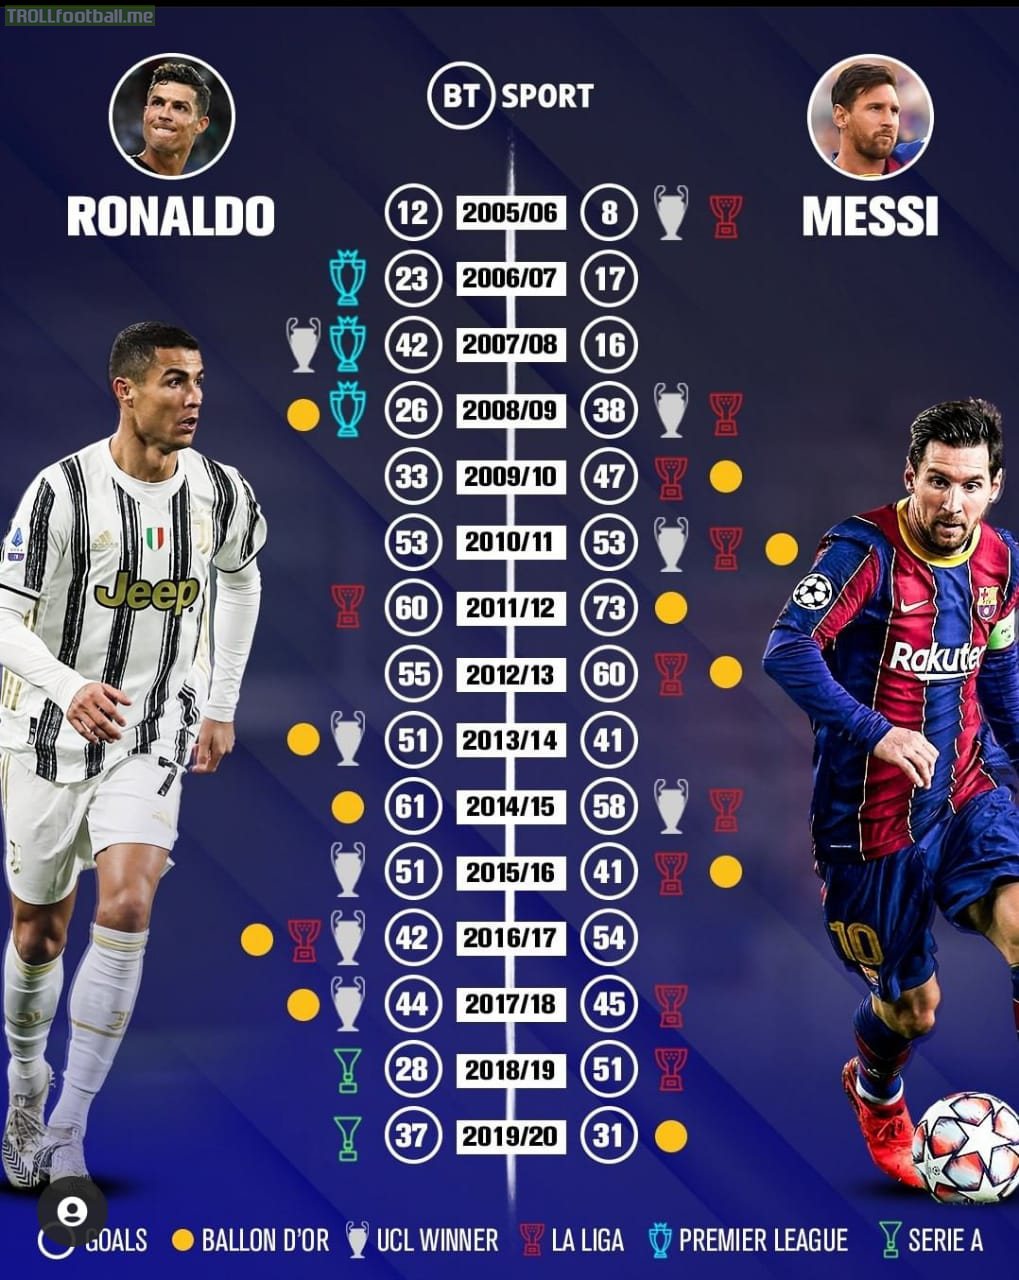 [Infographic] Cristiano Ronaldo vs Lionel messi:Season by Season breakdown ahead of Barca-Juventus clash tomorrow.